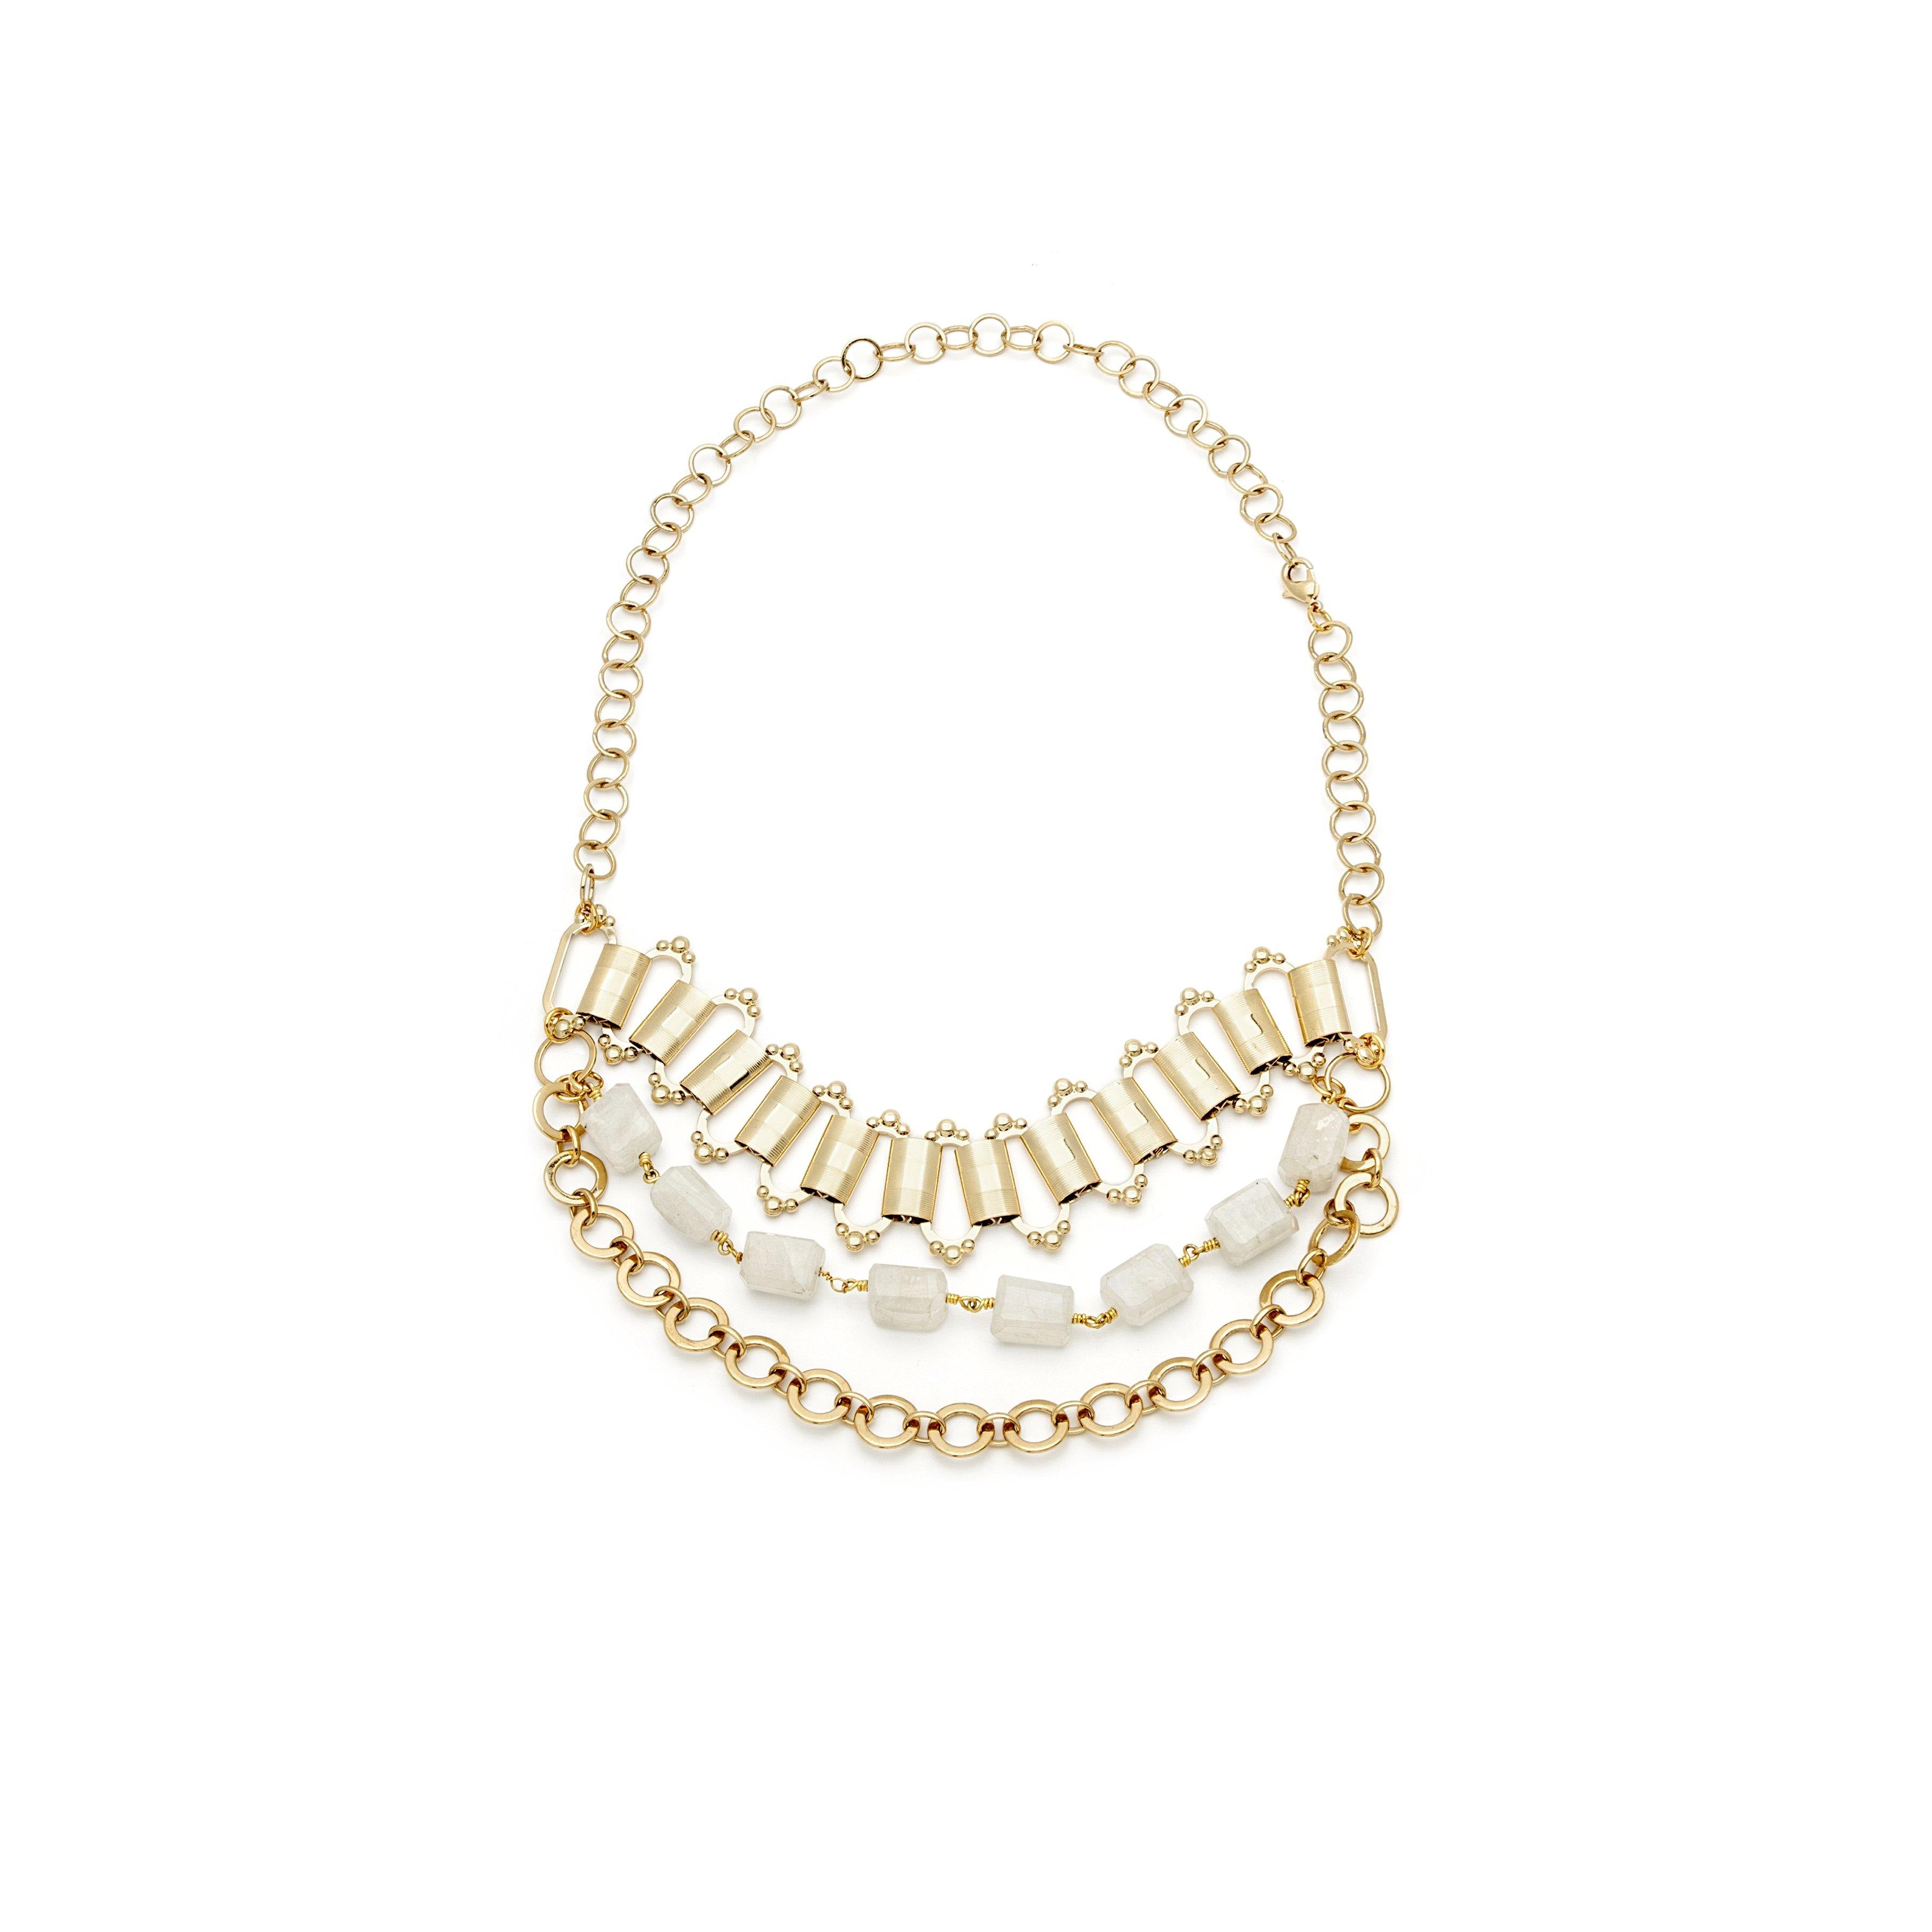 Moonstone Layered Necklace - Irit Sorokin Designs Jewelry